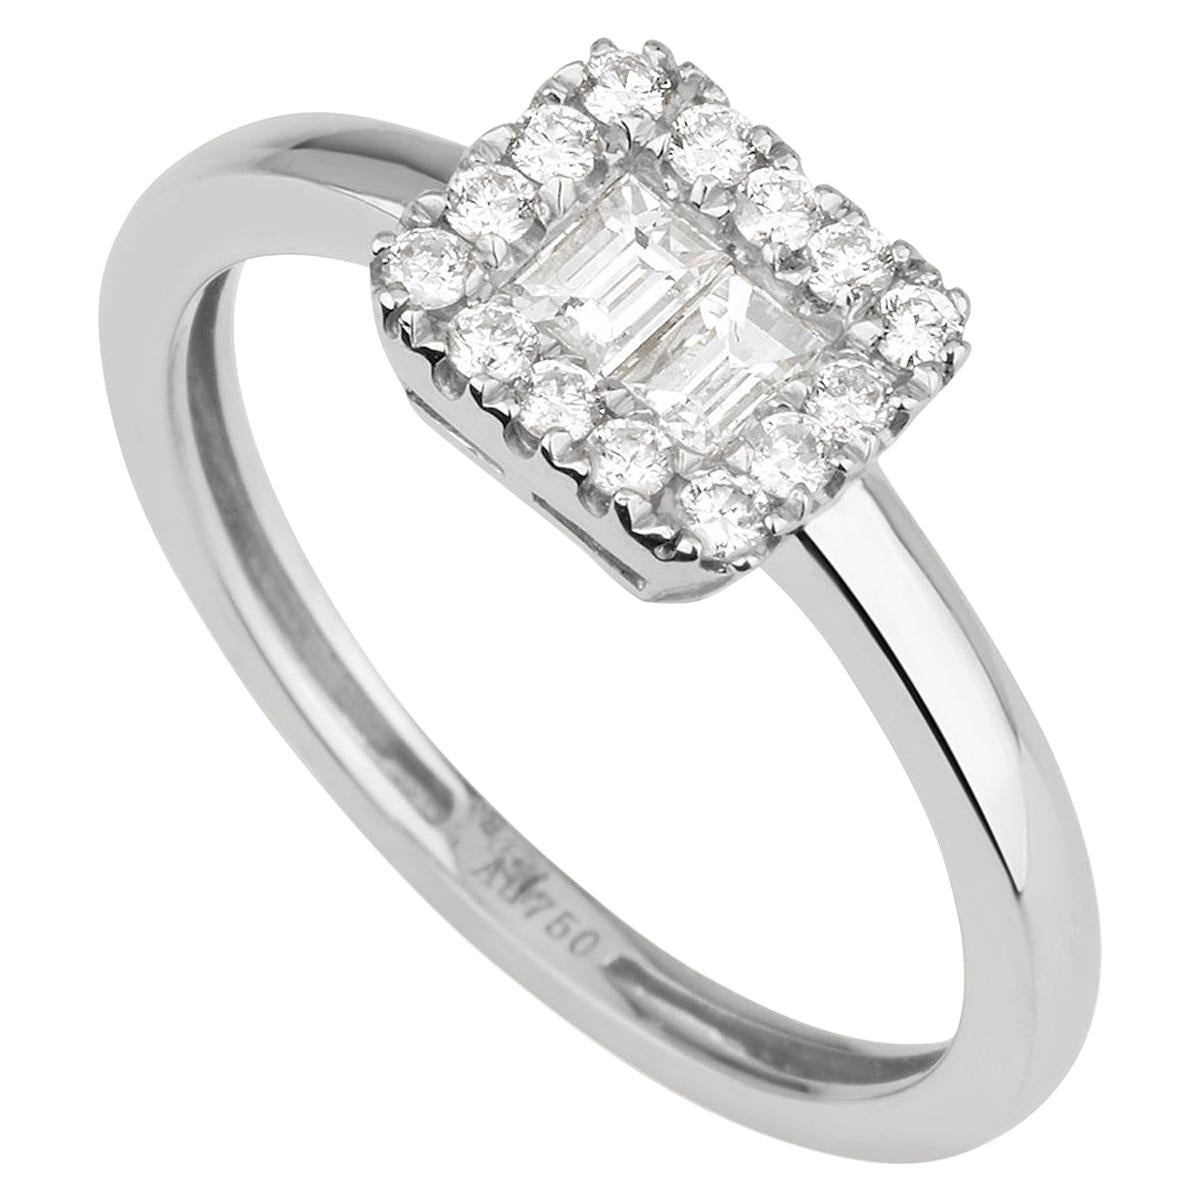 0.30 Carat Emerald Cut Halo Diamond Ring in 18K White Gold, Shlomit Rogel For Sale